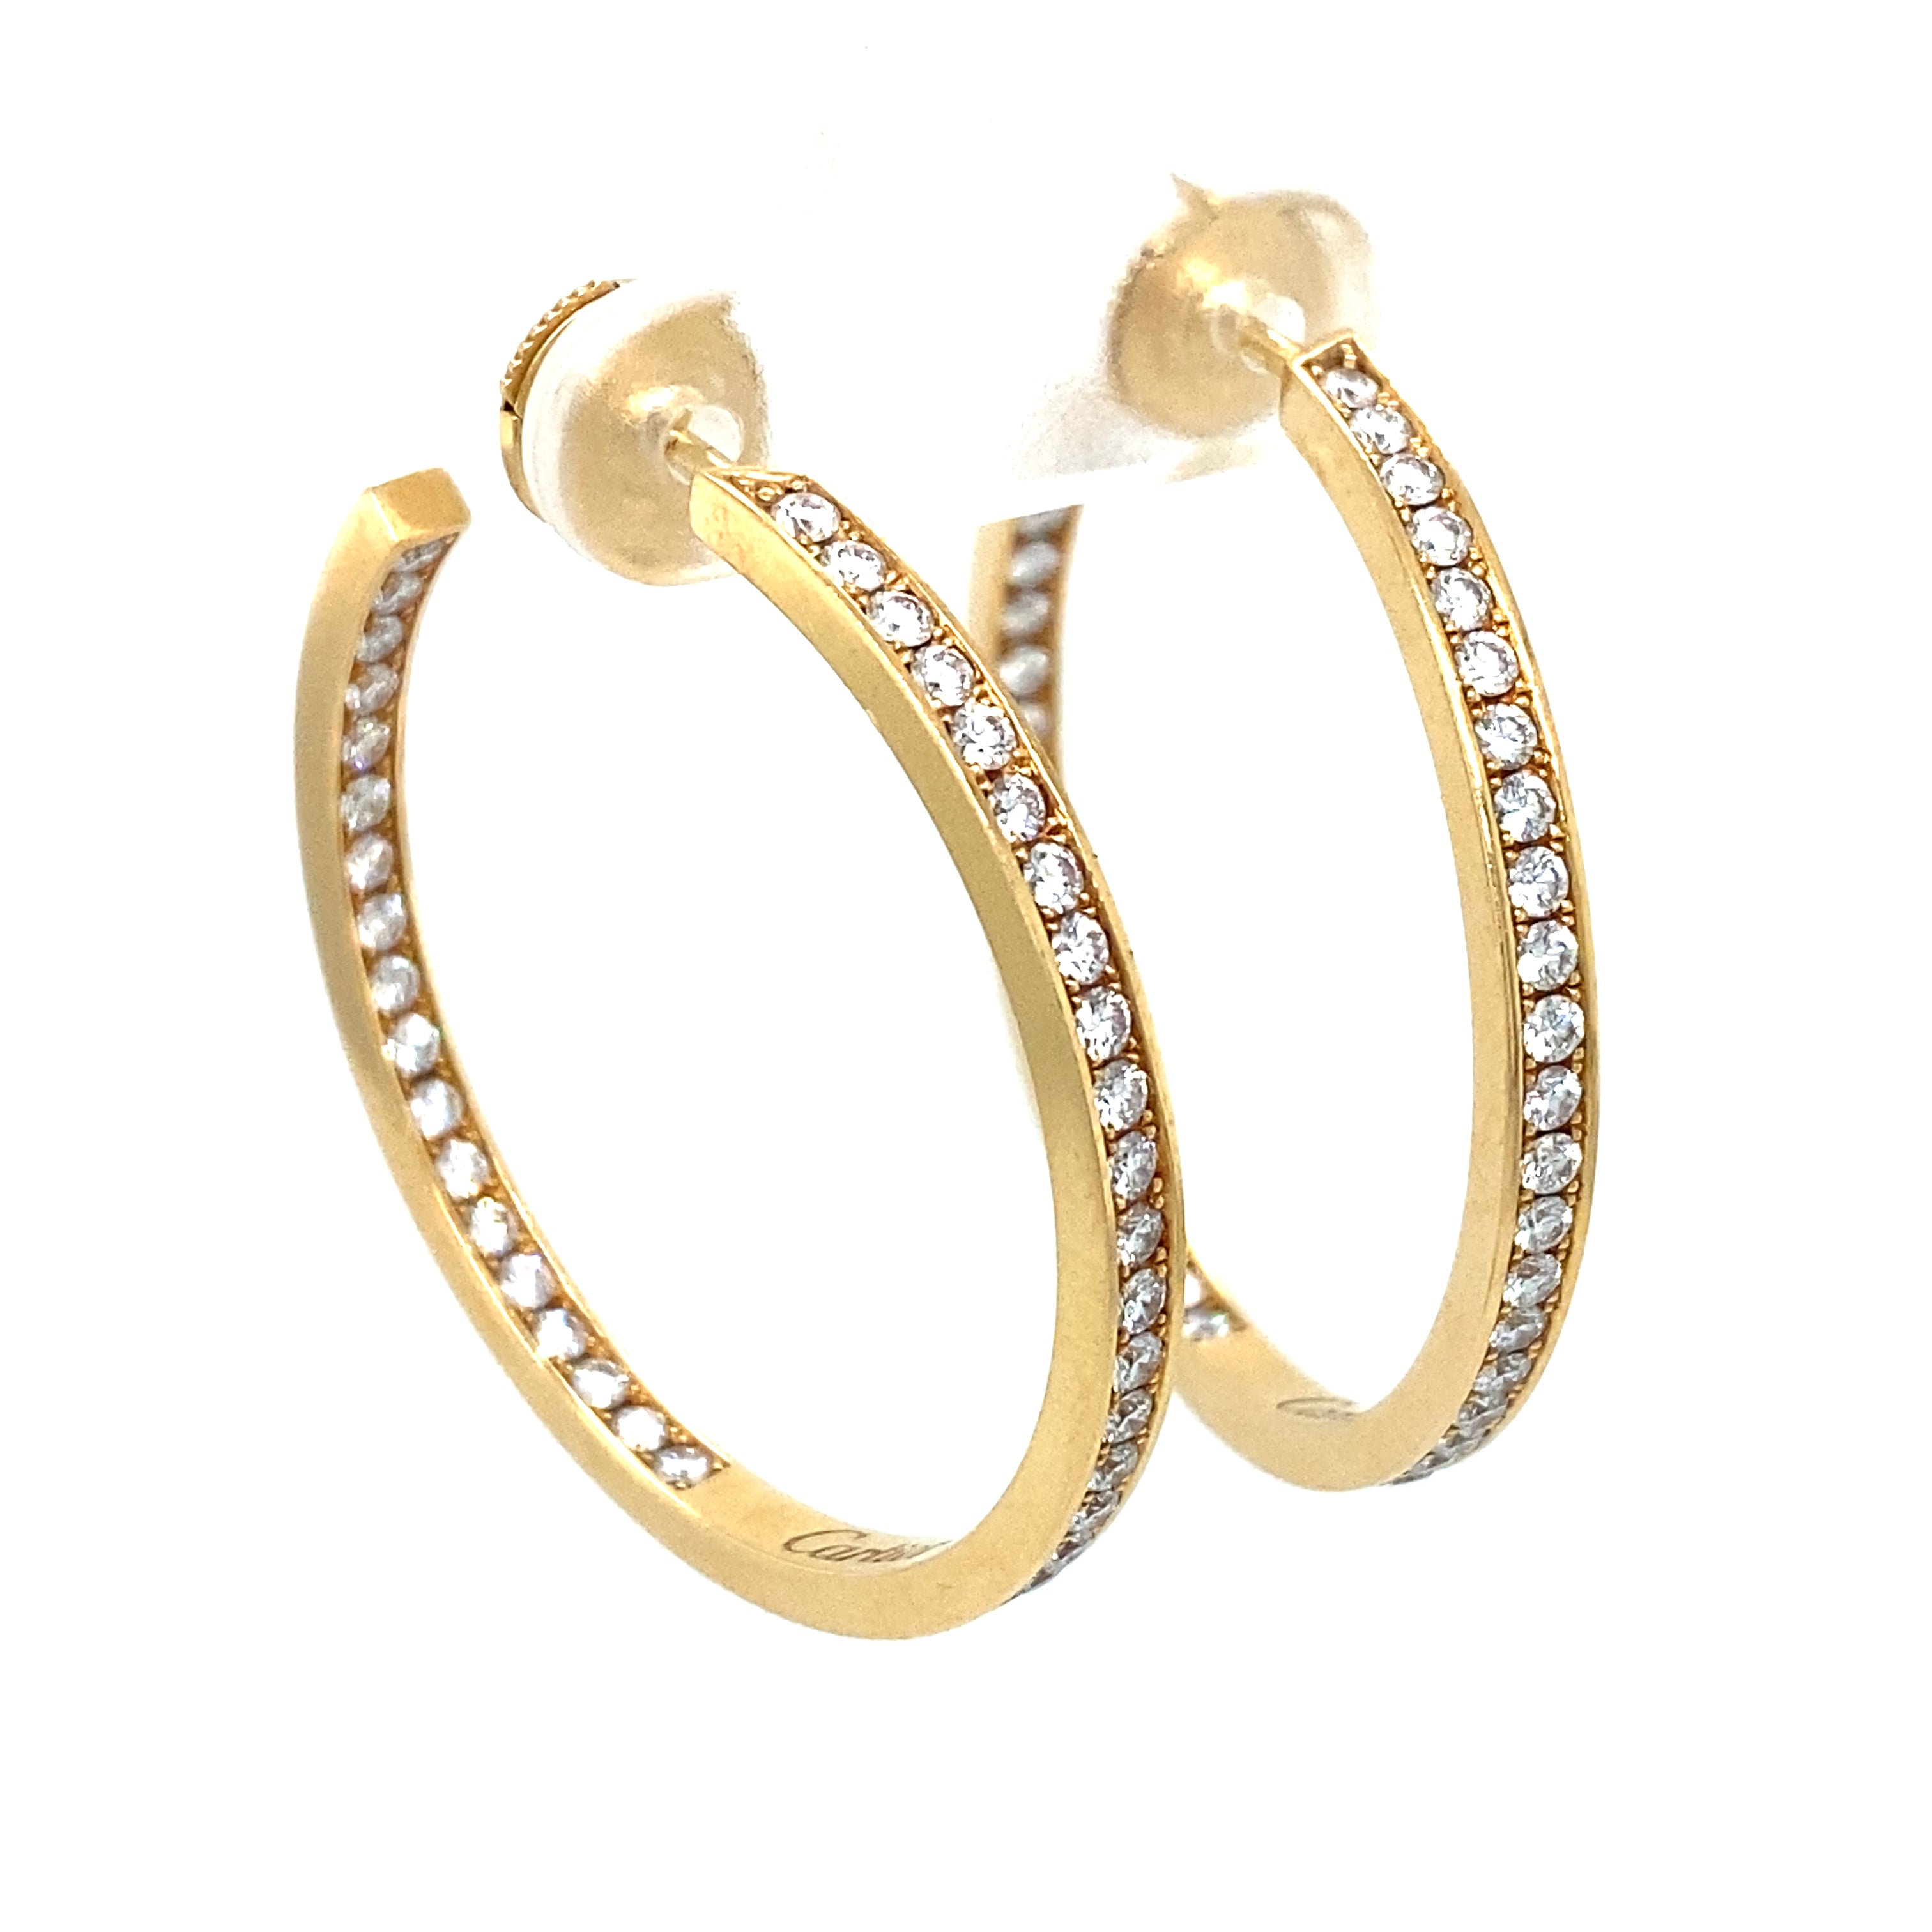 Cartier Mi Mister Diamond Ladies Earrings 750 Yellow Gold - 2 Pieces |  Chairish